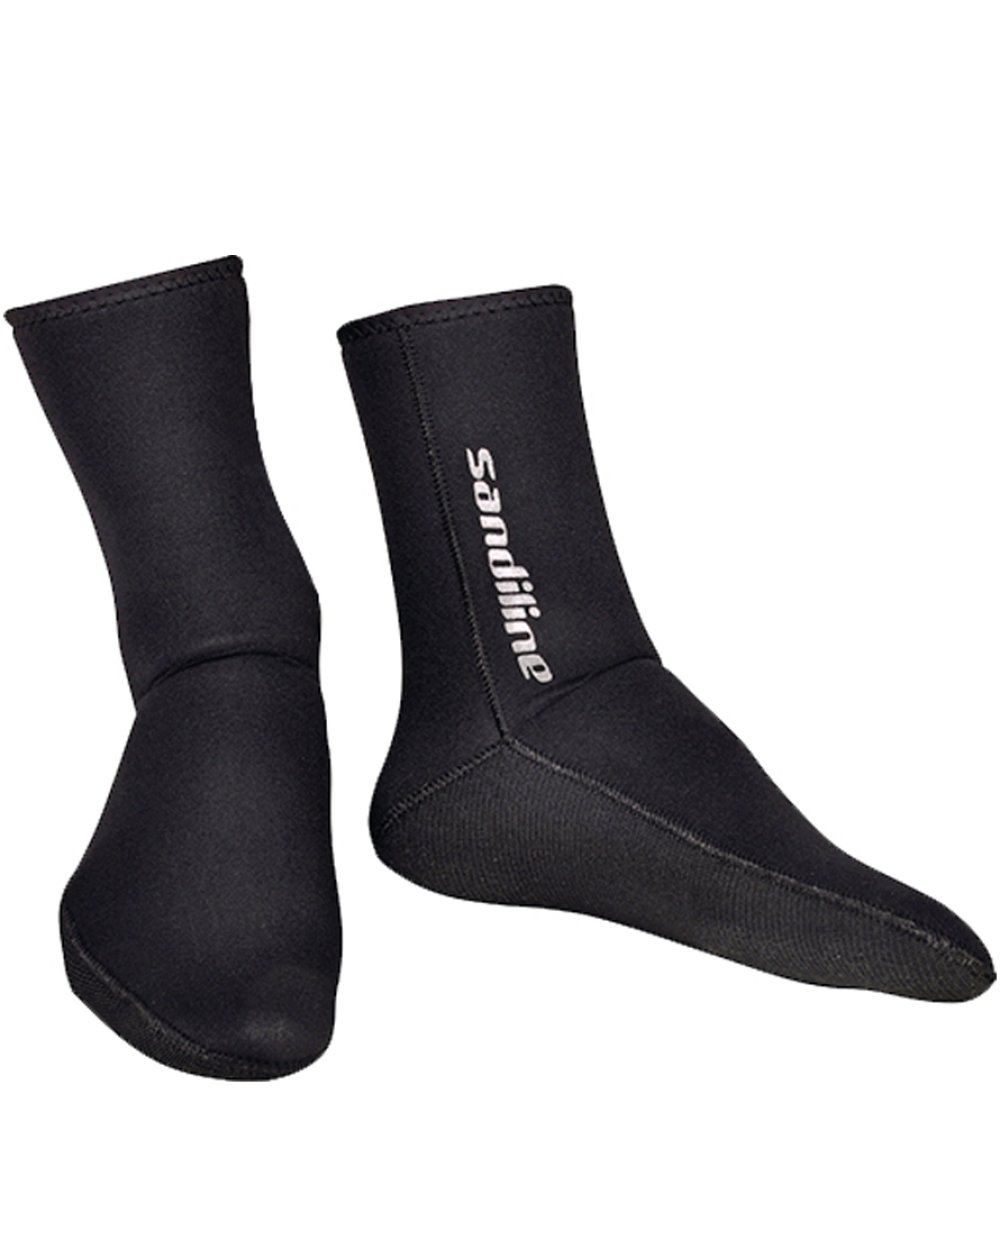 SANDILINE Socks Splash 30 - Gr. 40/41